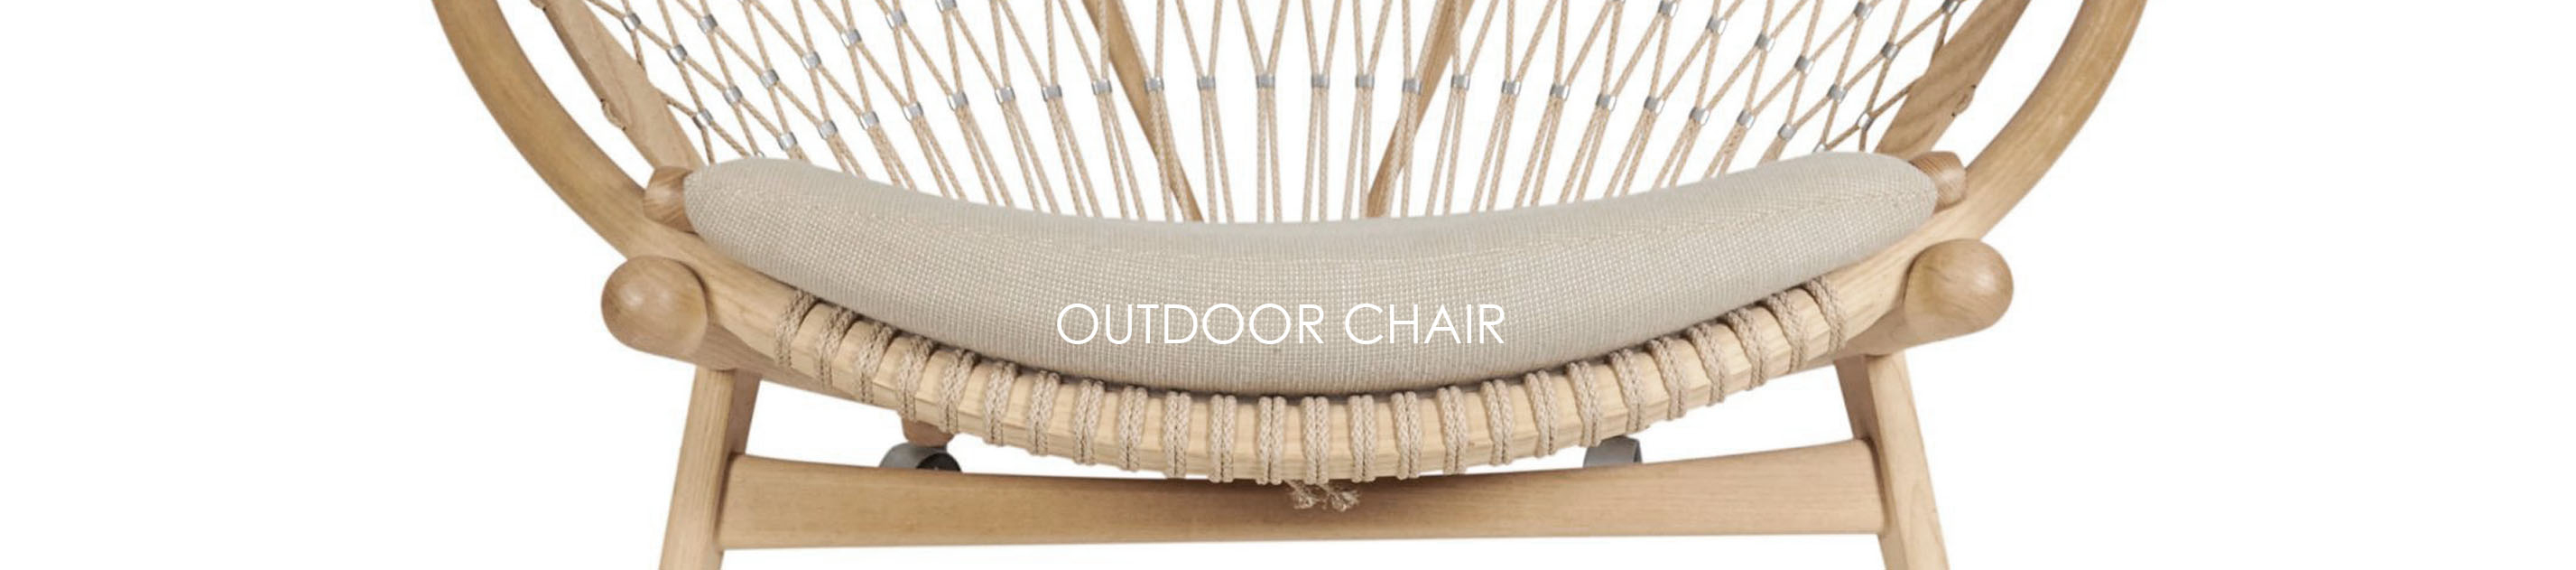 Buy Outdoor Chairs in Hong Kong | Stockroom Furniture HK